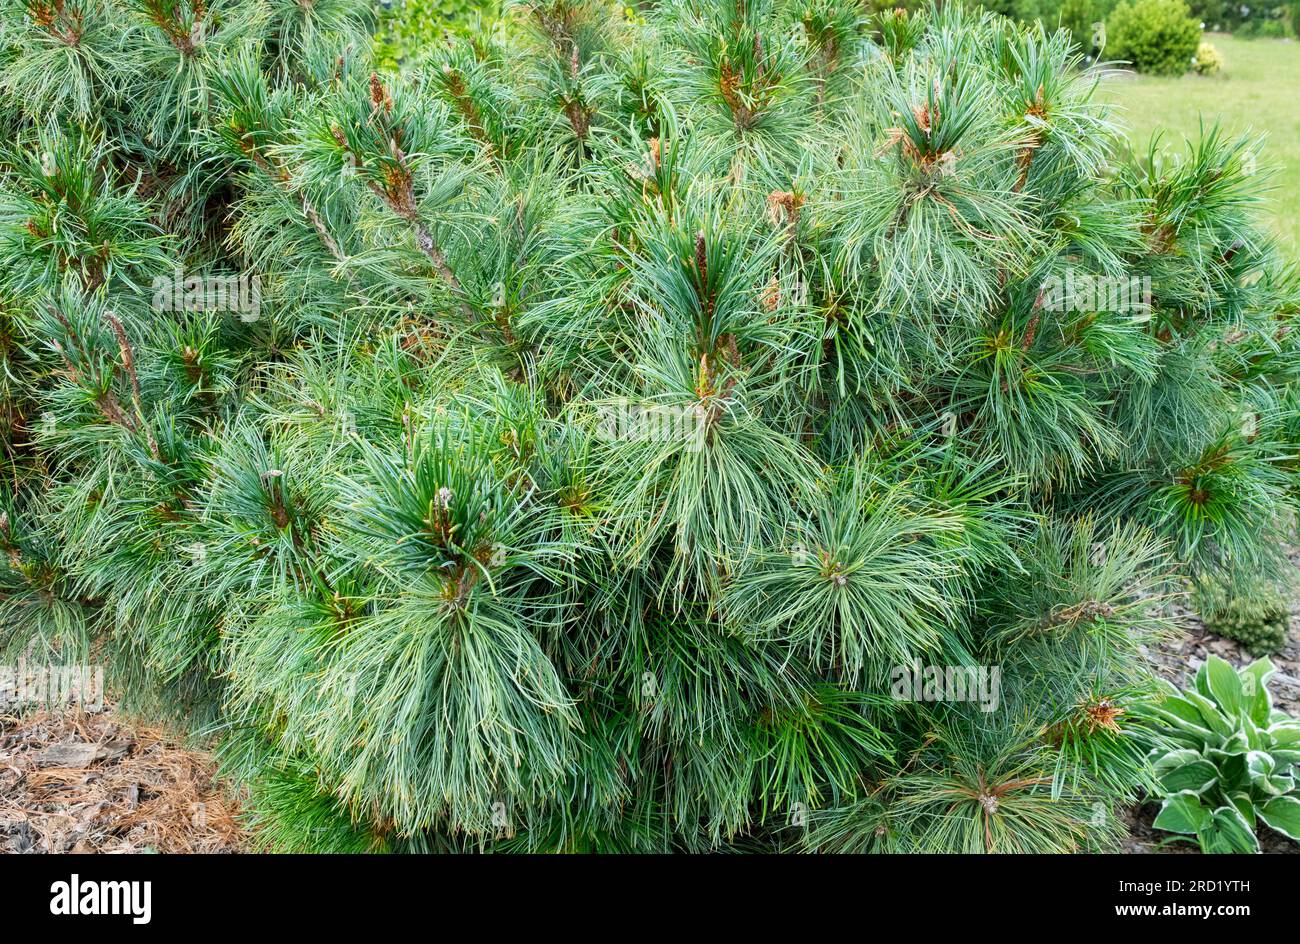 Dwarf Siberian Pine, Tree, Pinus pumila "Glauca" in garden Stock Photo